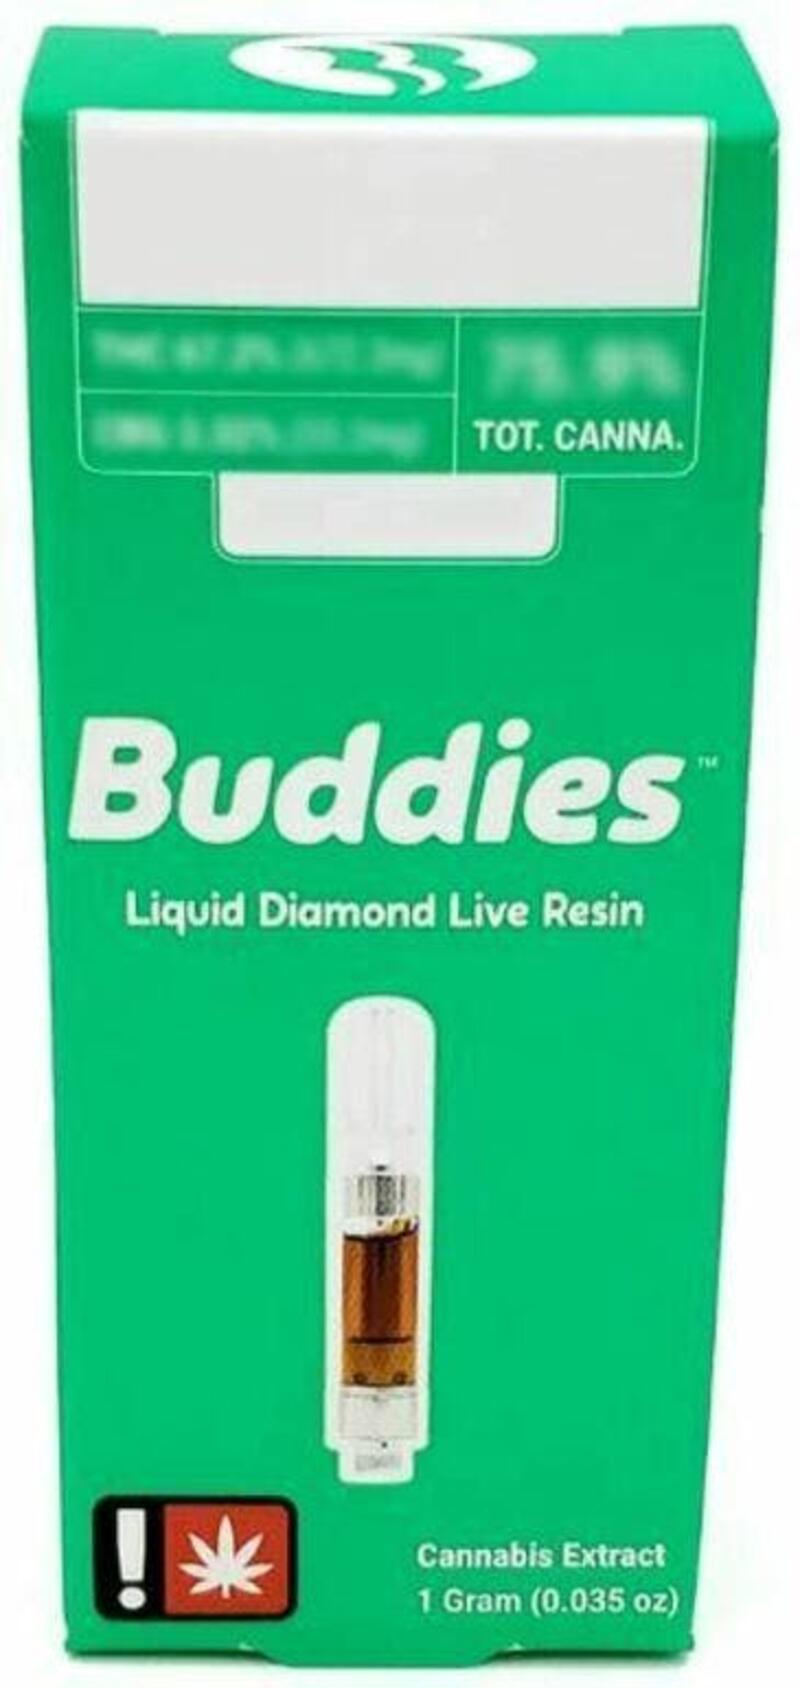 Buddies Liquid Diamonds Live Resin Cart 1g (I) 3 Bears OG